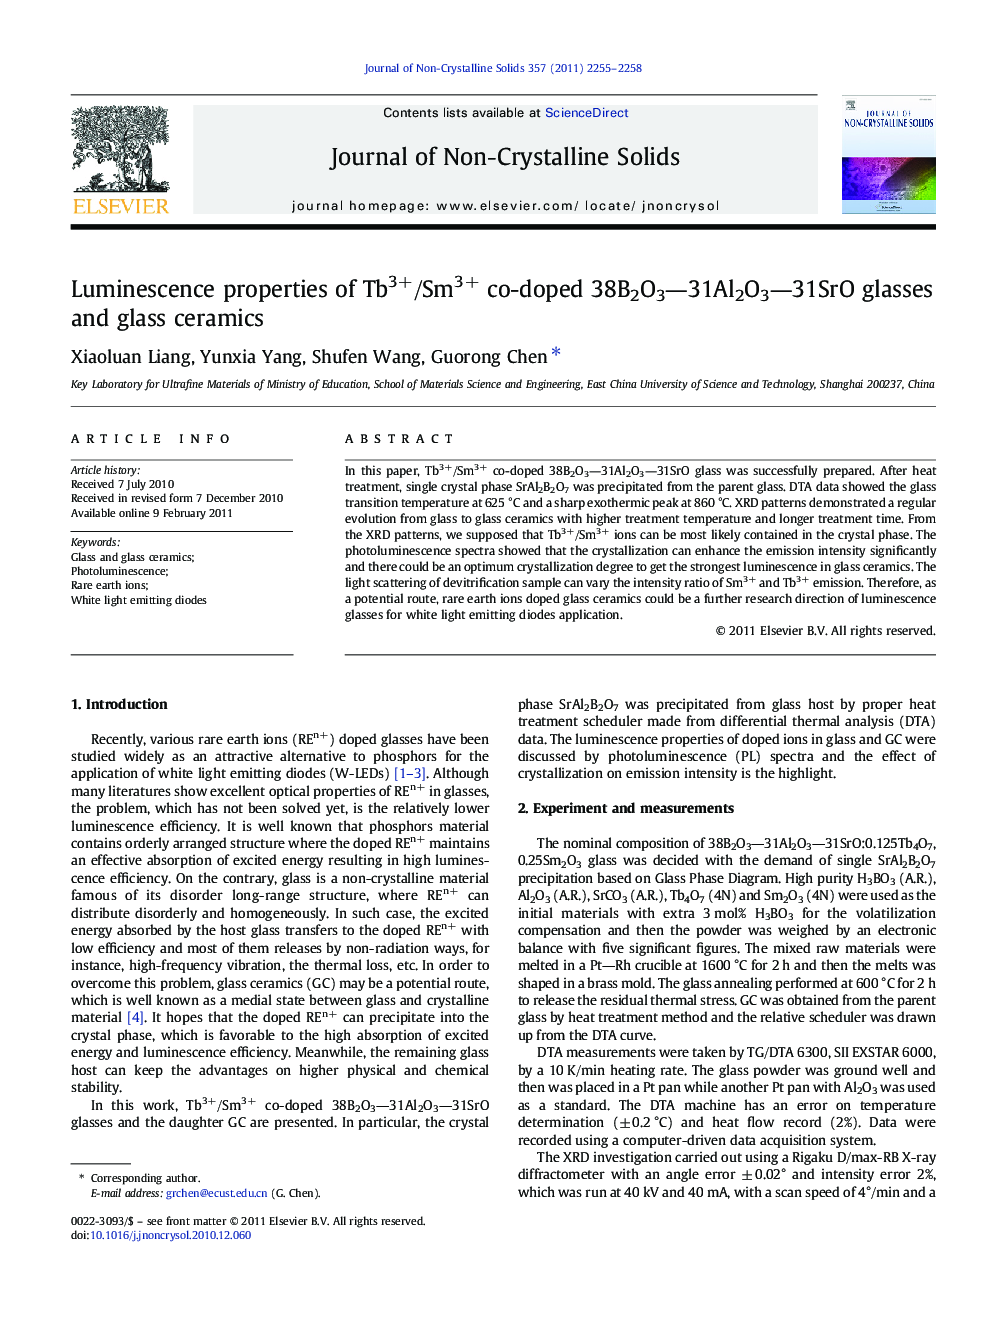 Luminescence properties of Tb3+/Sm3+ co-doped 38B2O3―31Al2O3―31SrO glasses and glass ceramics